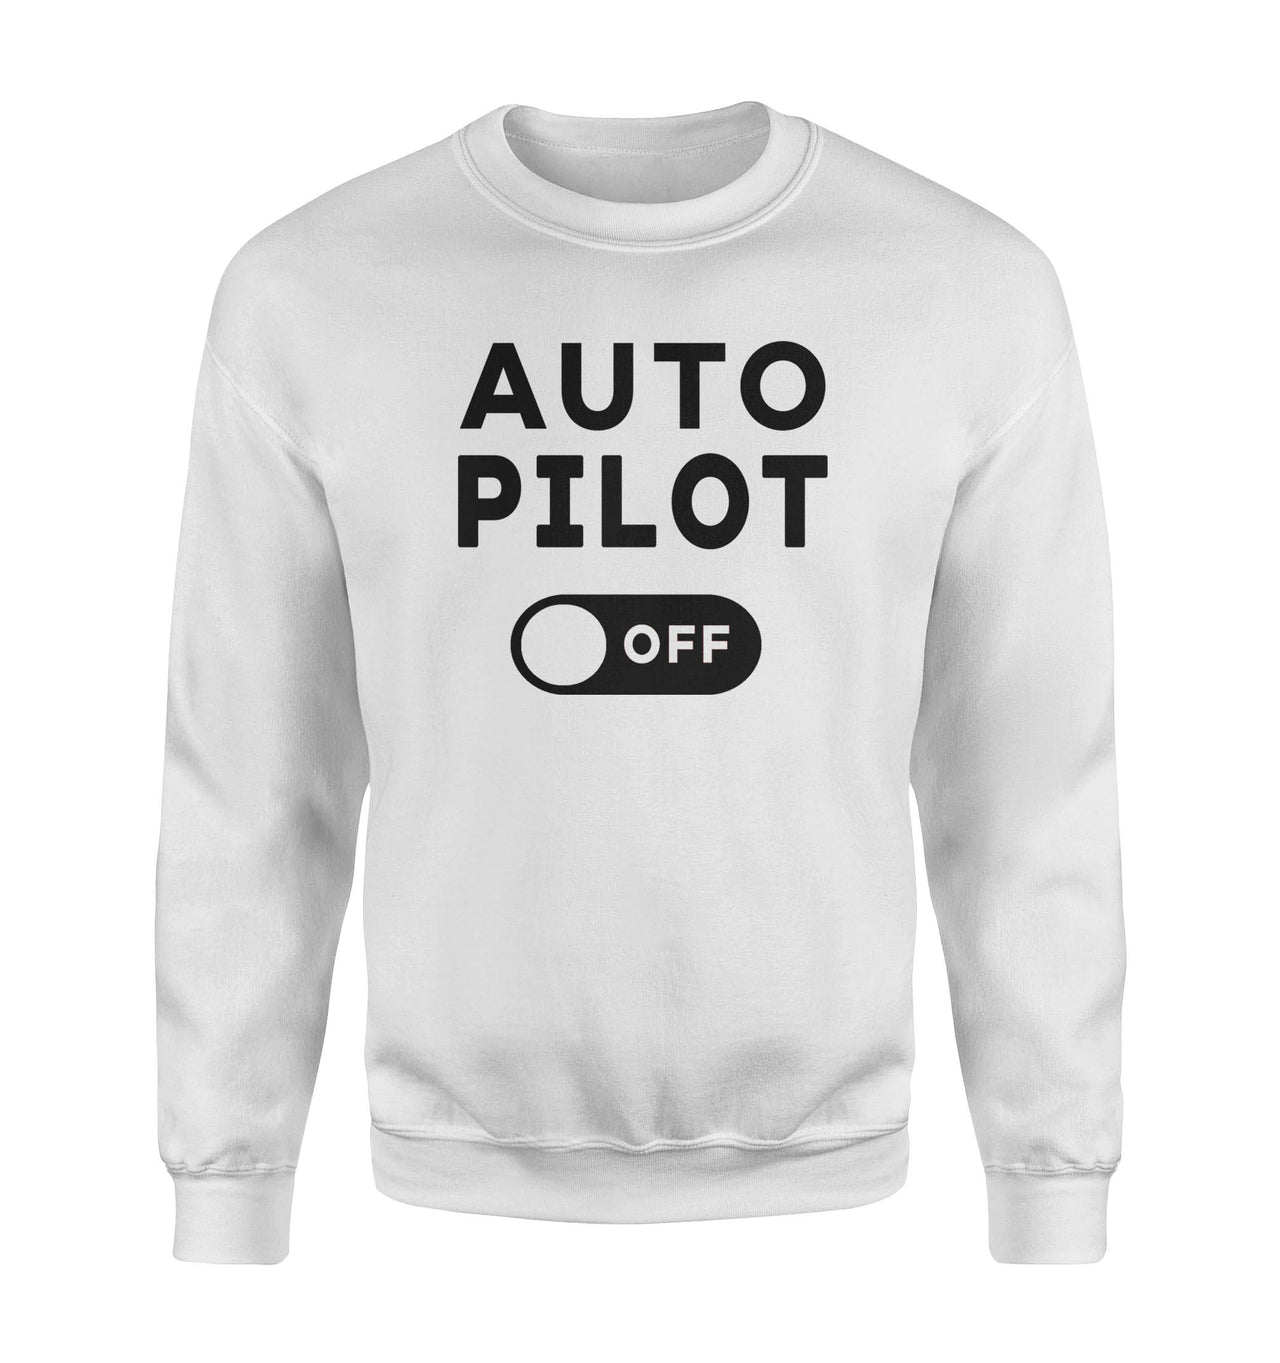 Auto Pilot OFF Designed Sweatshirts